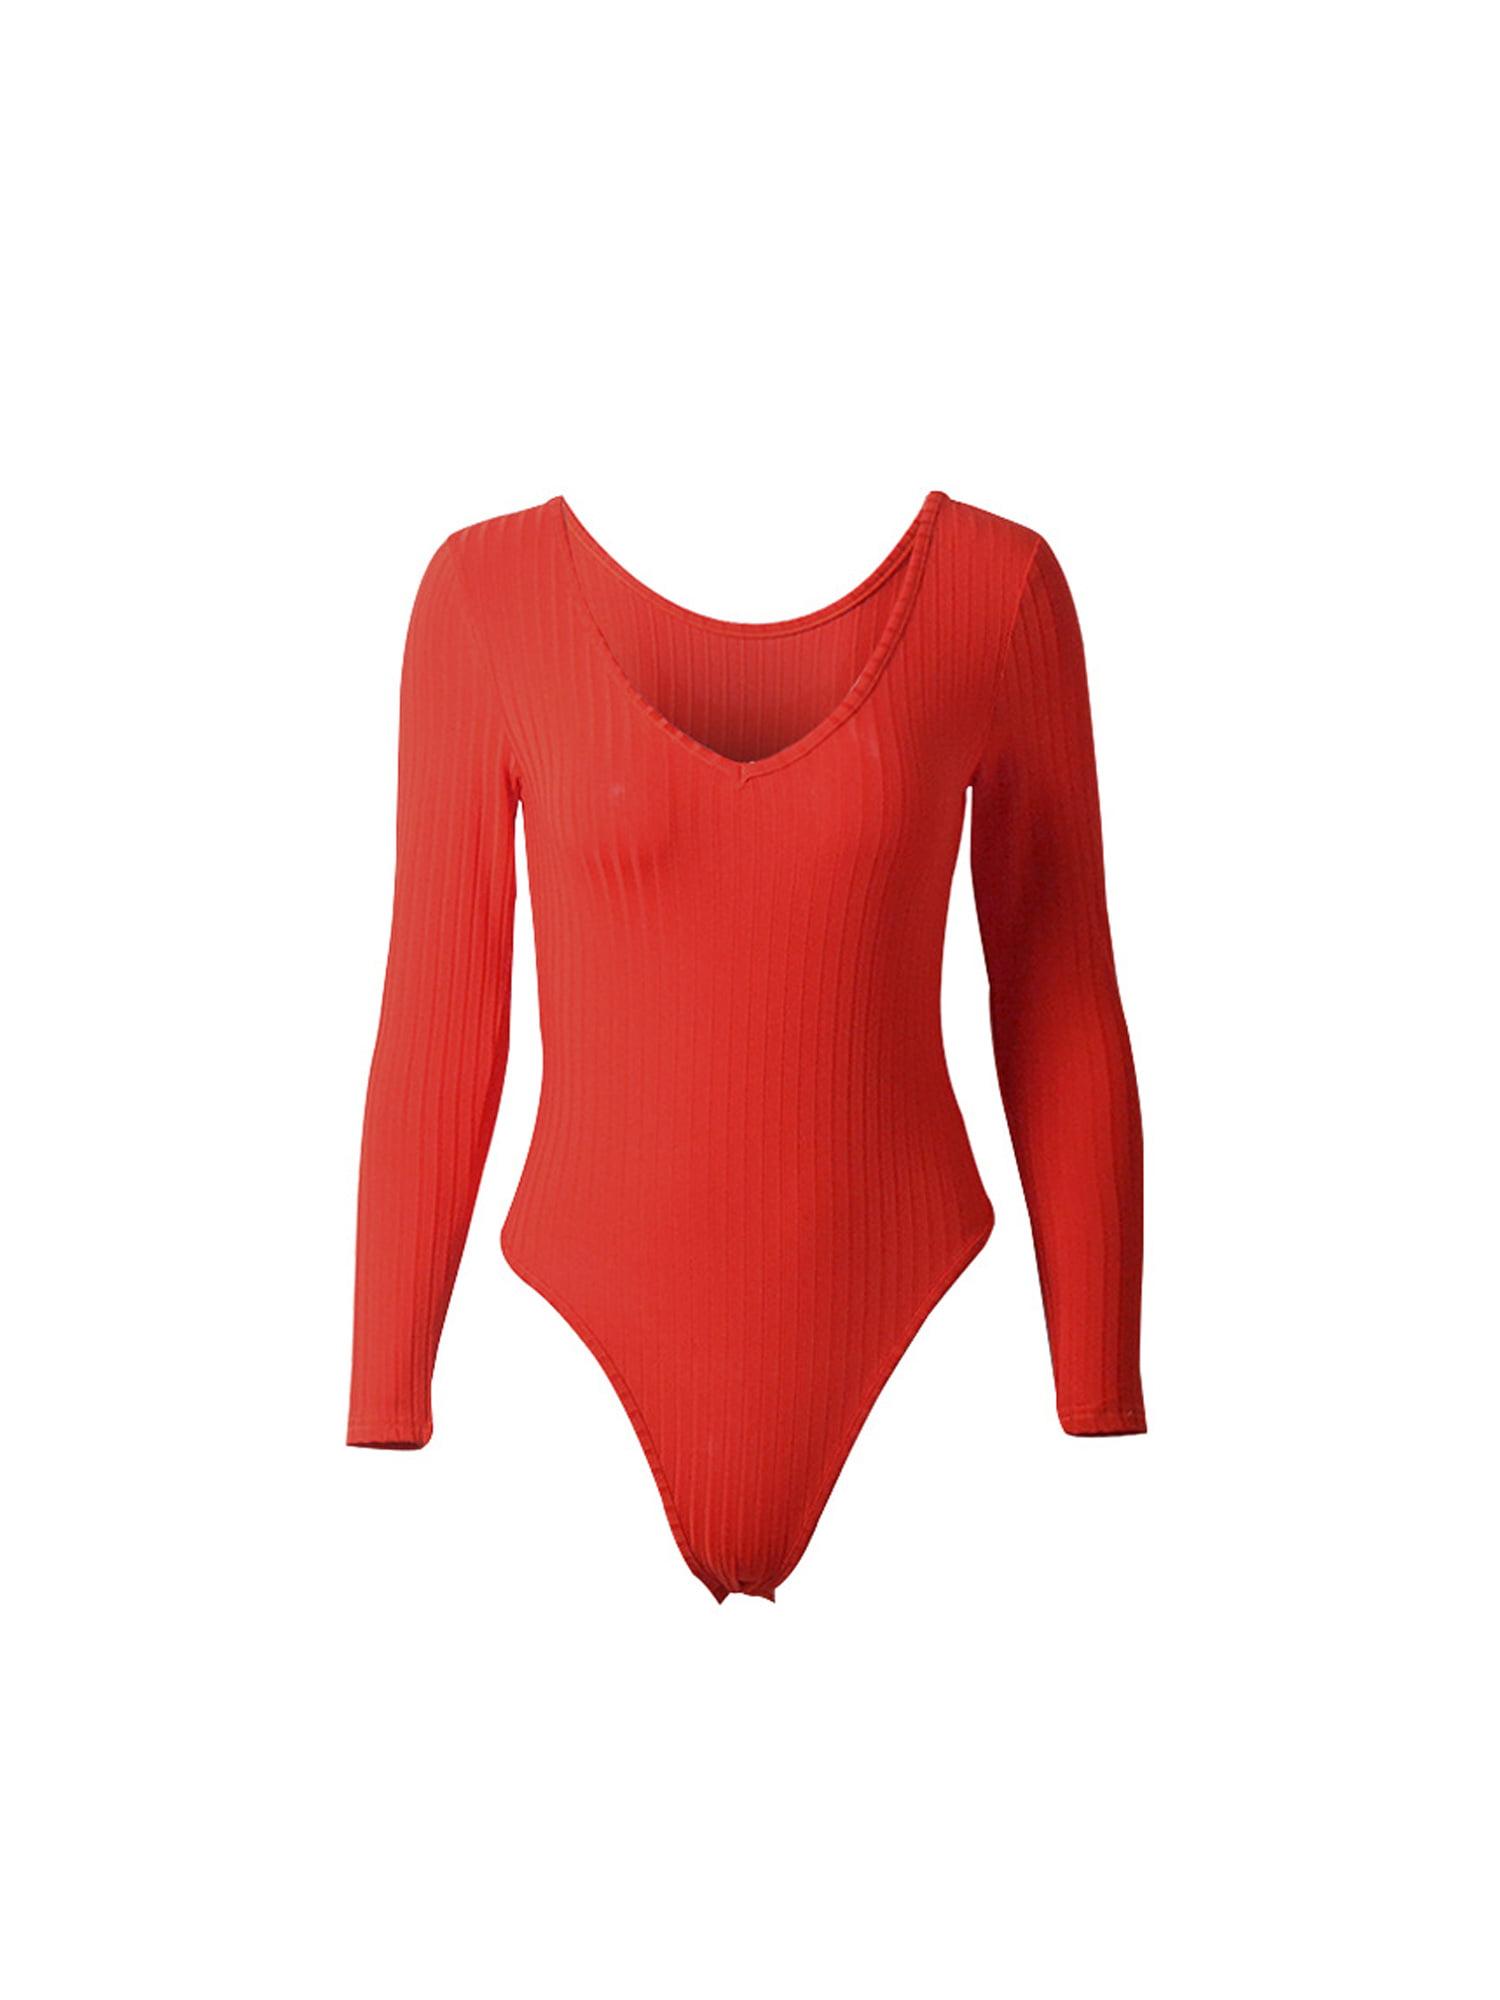 LINMON Women's Short Sleeve Bodysuits Basic T Shirts Round Neck Stretchy Jumpsuit Tops 